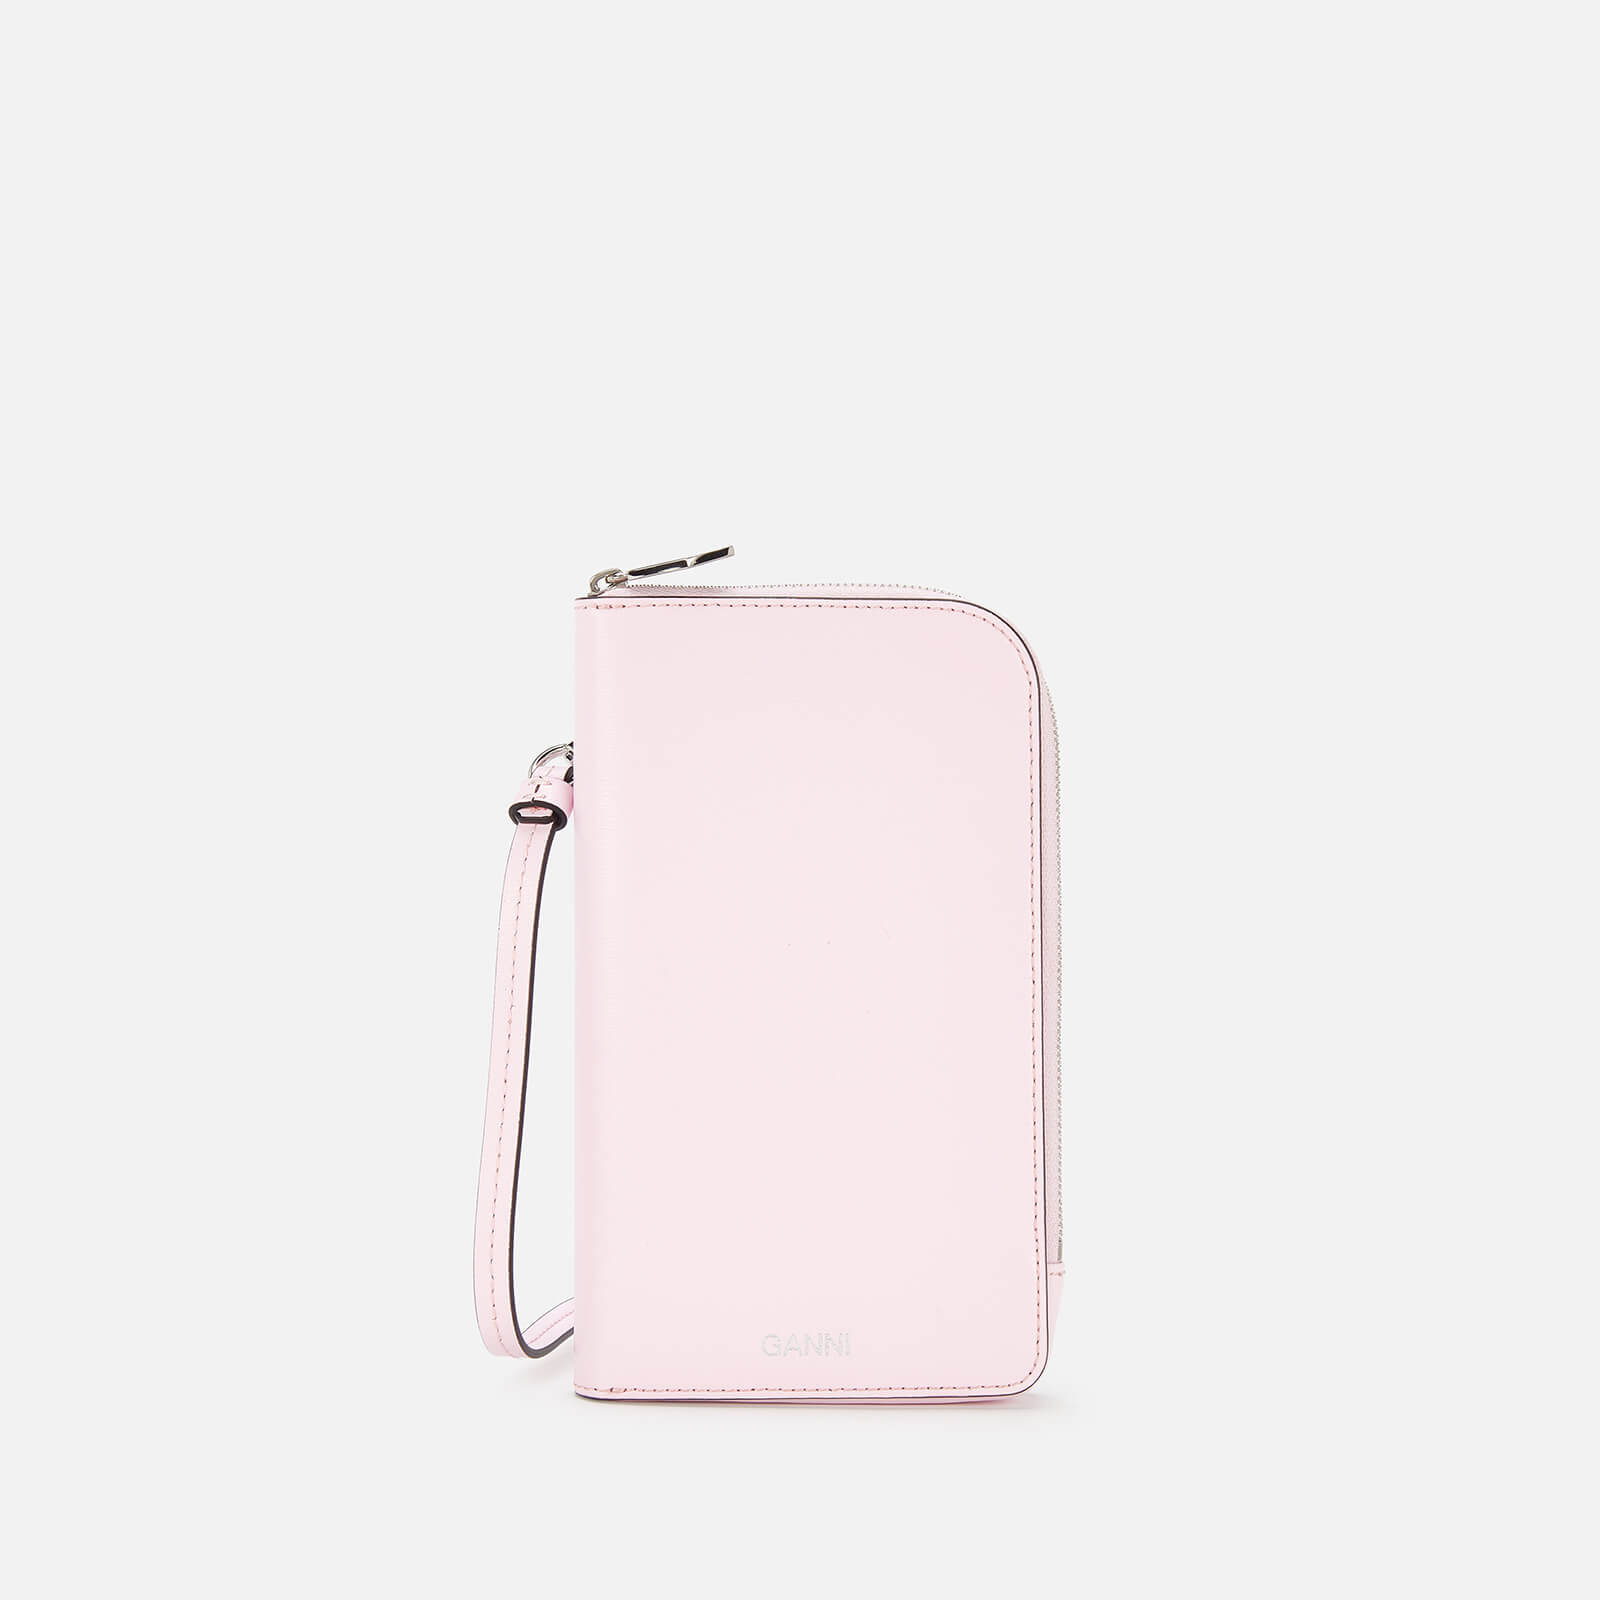 Ganni Women's Phone Bag - Cherry Blossom